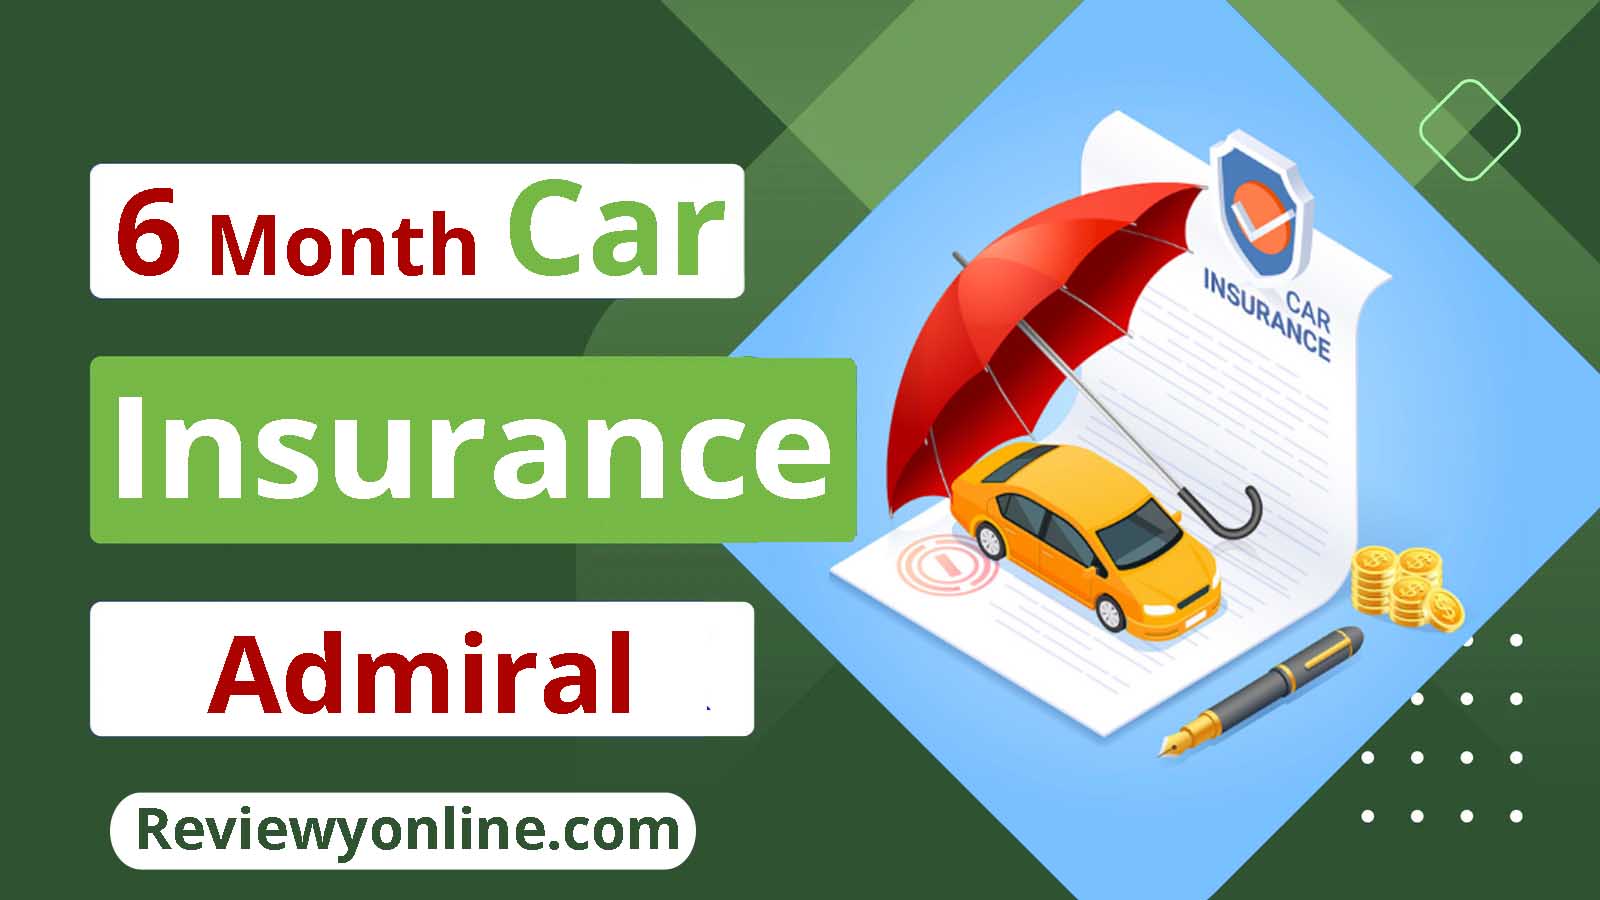 6 Month Car Insurance Admiral Reviewyonline.com